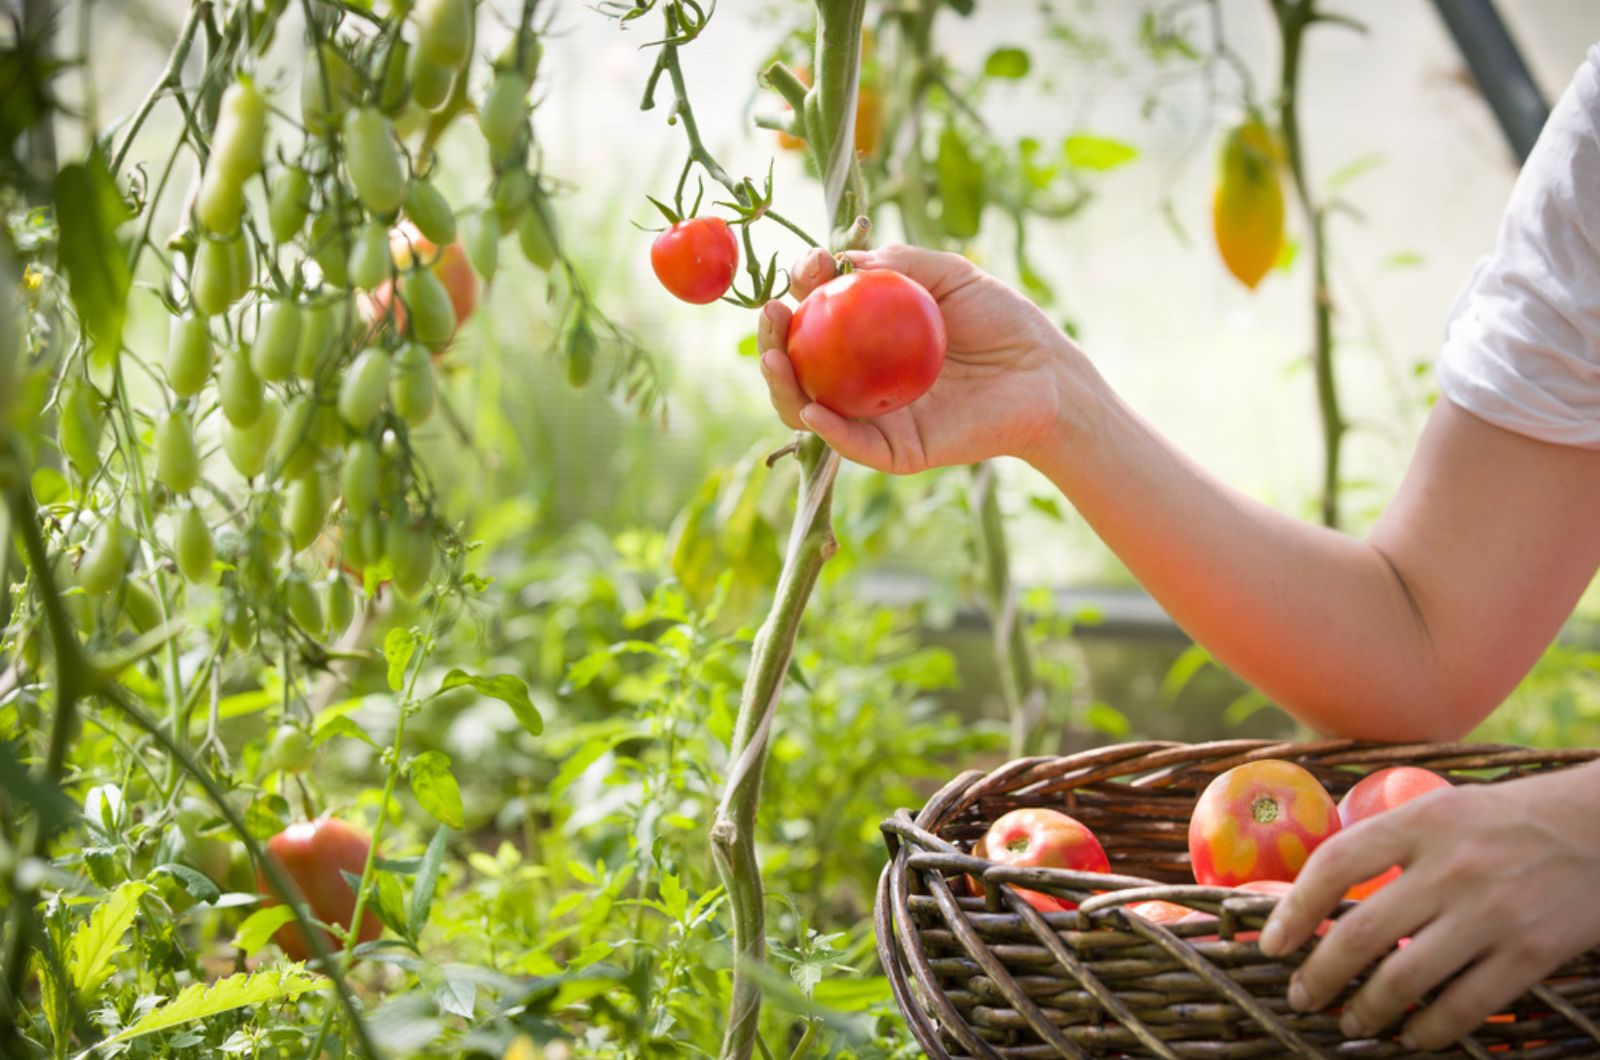 woman's hands harvesting fresh organic tomatoes in her garden